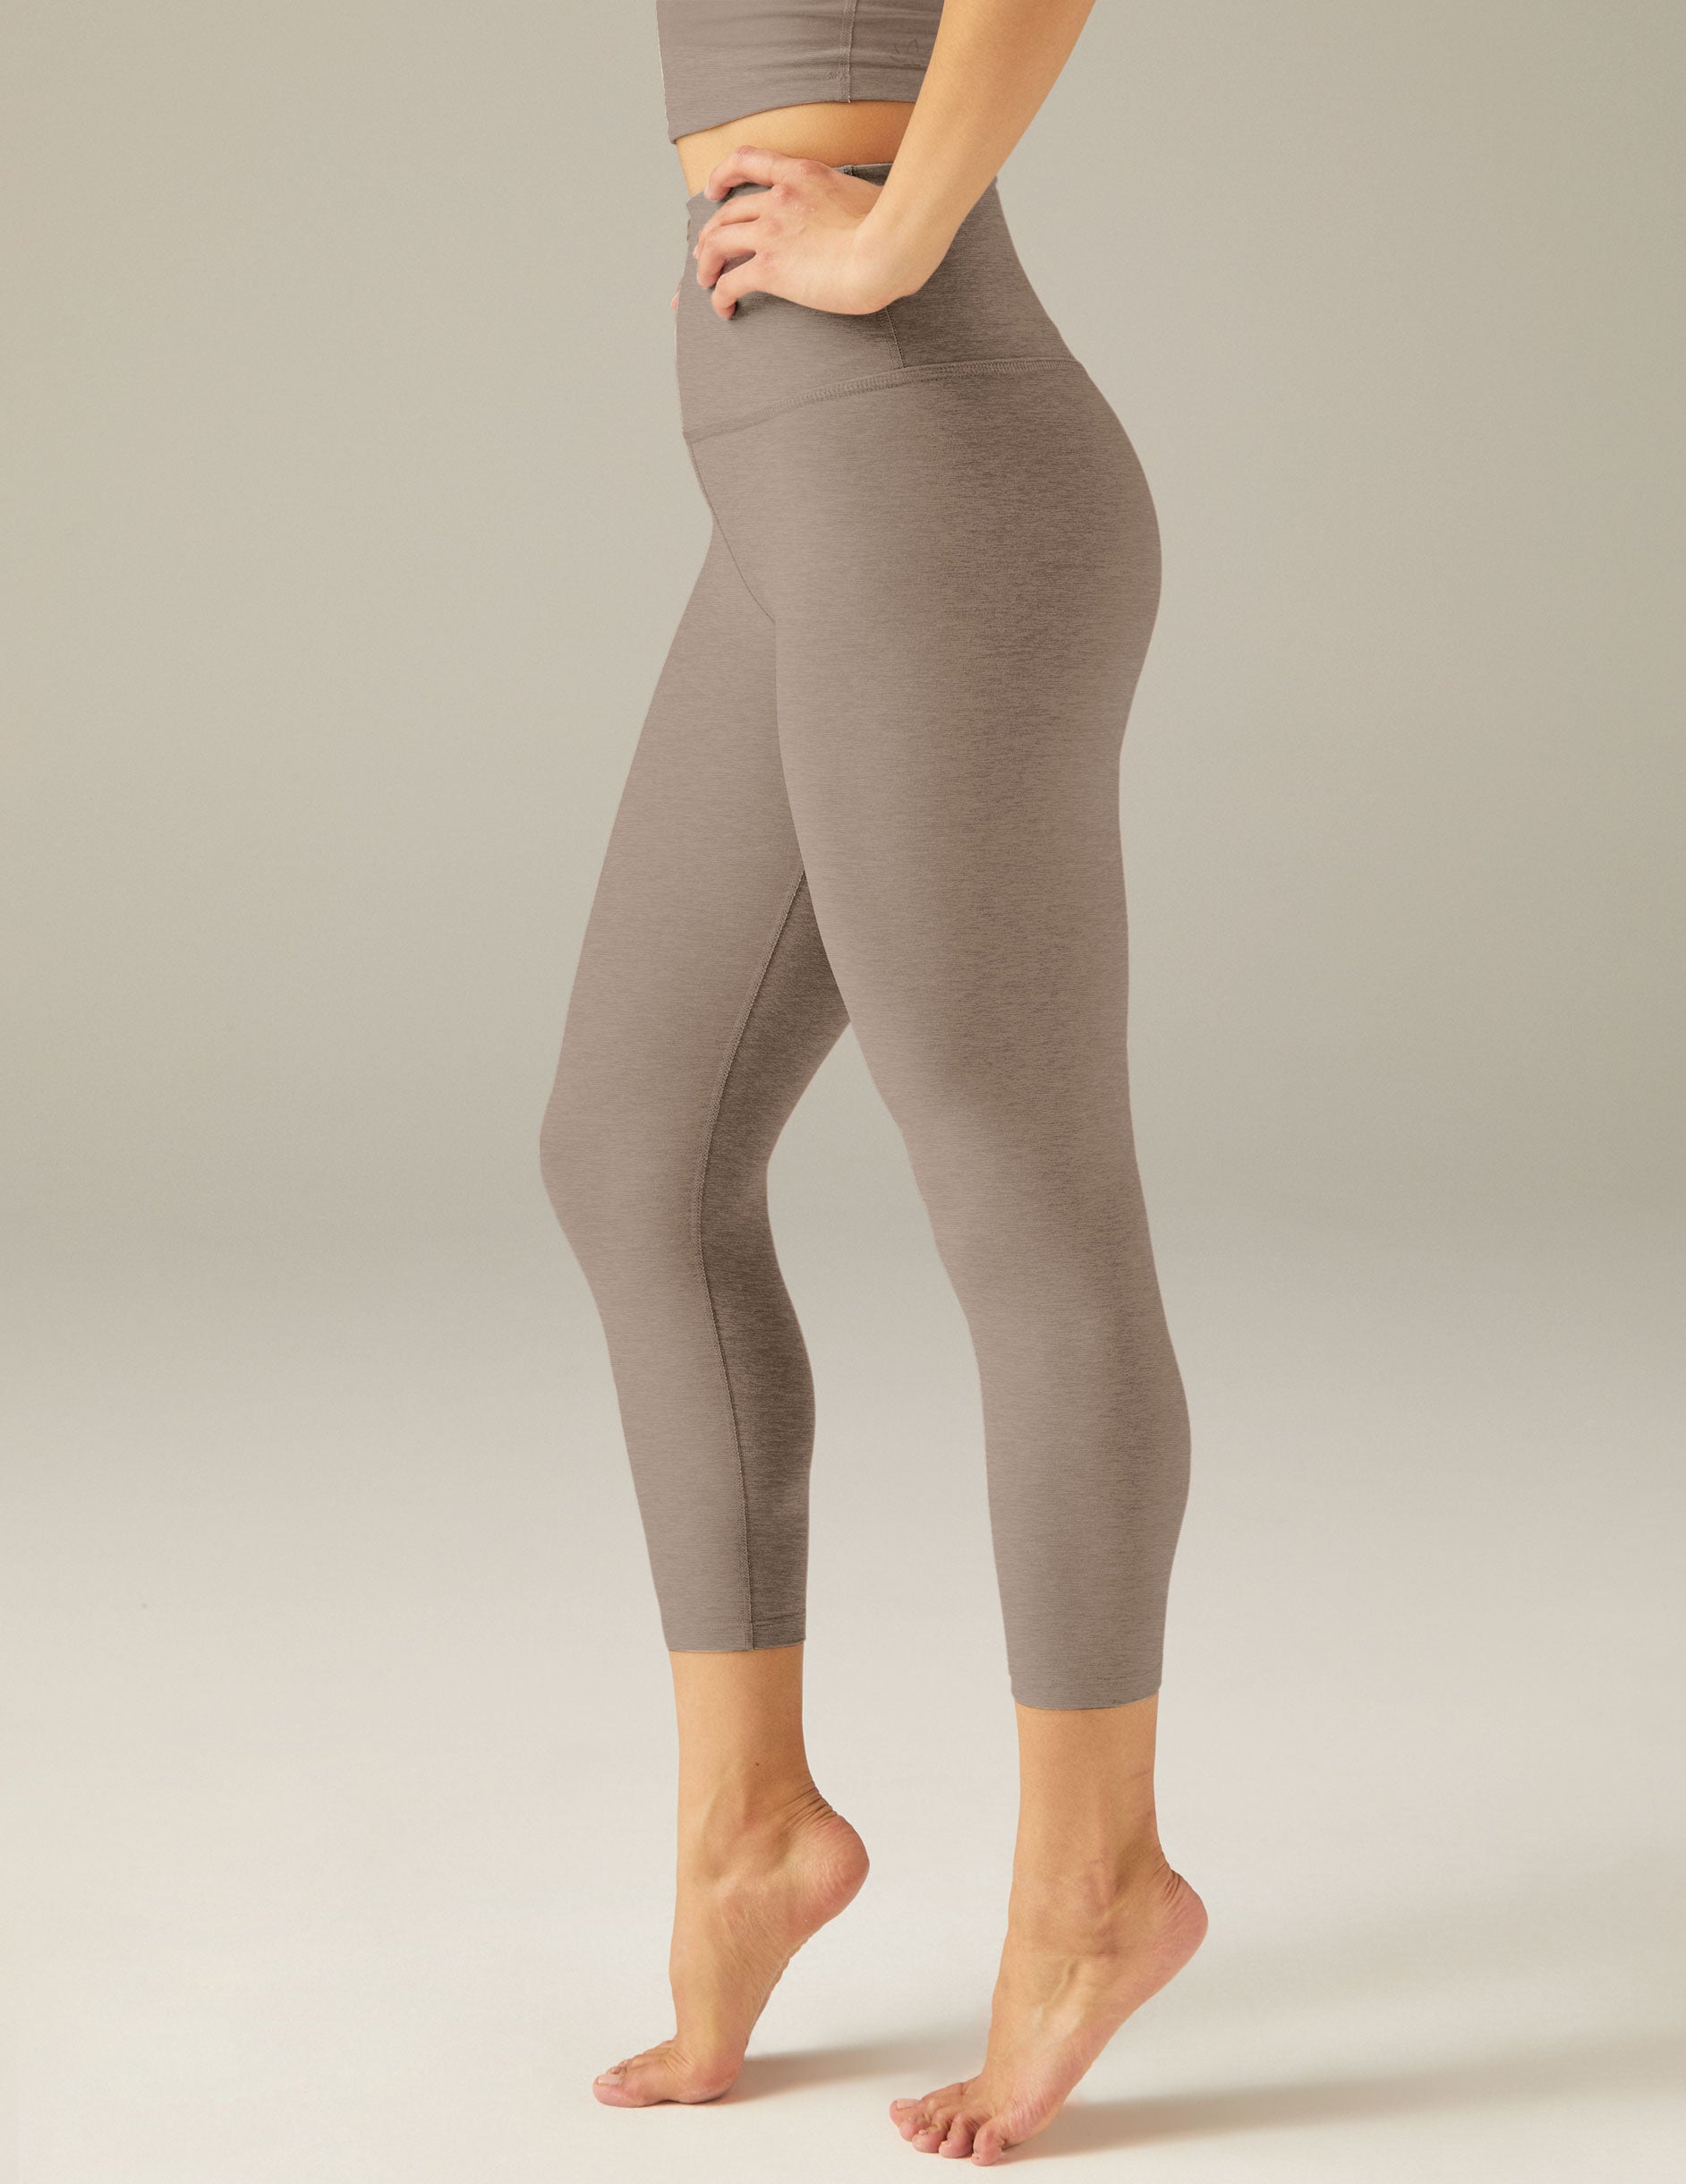 LifeSky High Waist Capri Yoga Pants Workout Leggings for Women